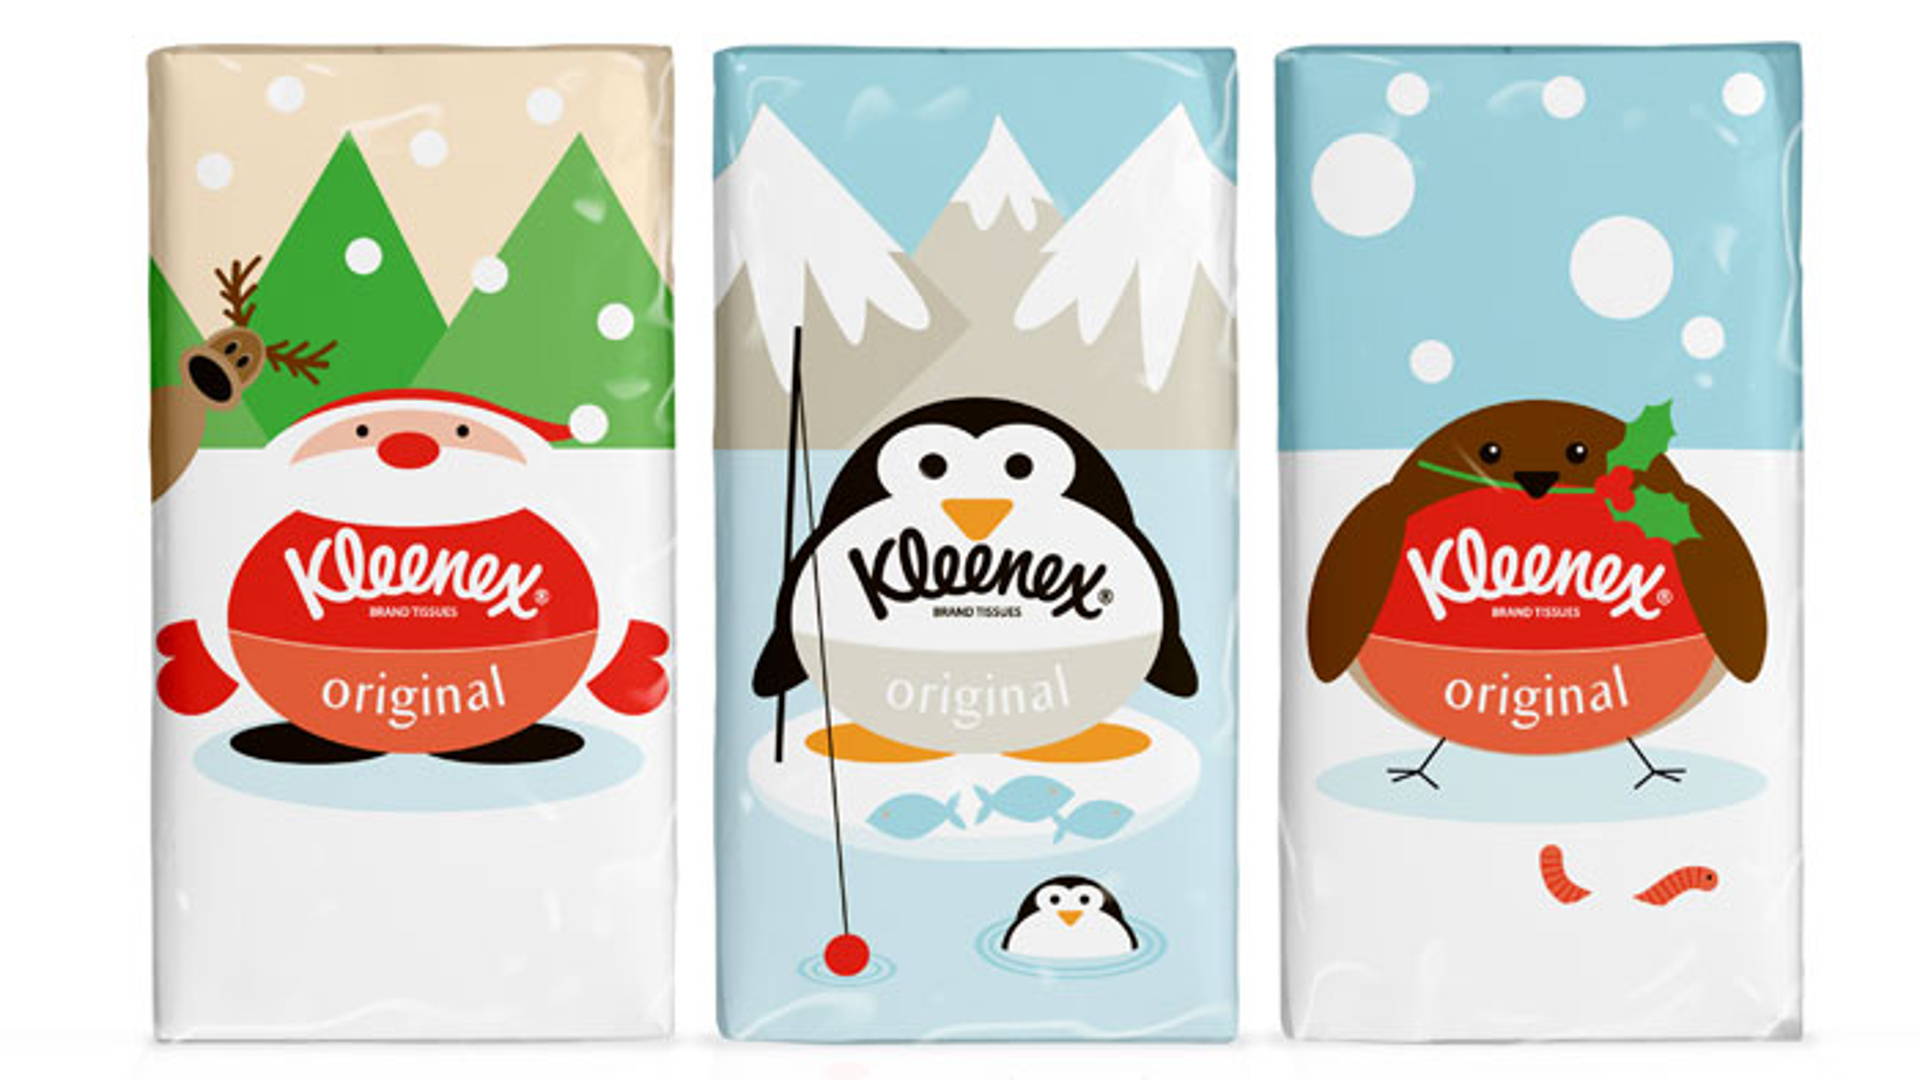 subterraneo Shetland Hablar Kleenex Original Seasonal | Dieline - Design, Branding & Packaging  Inspiration